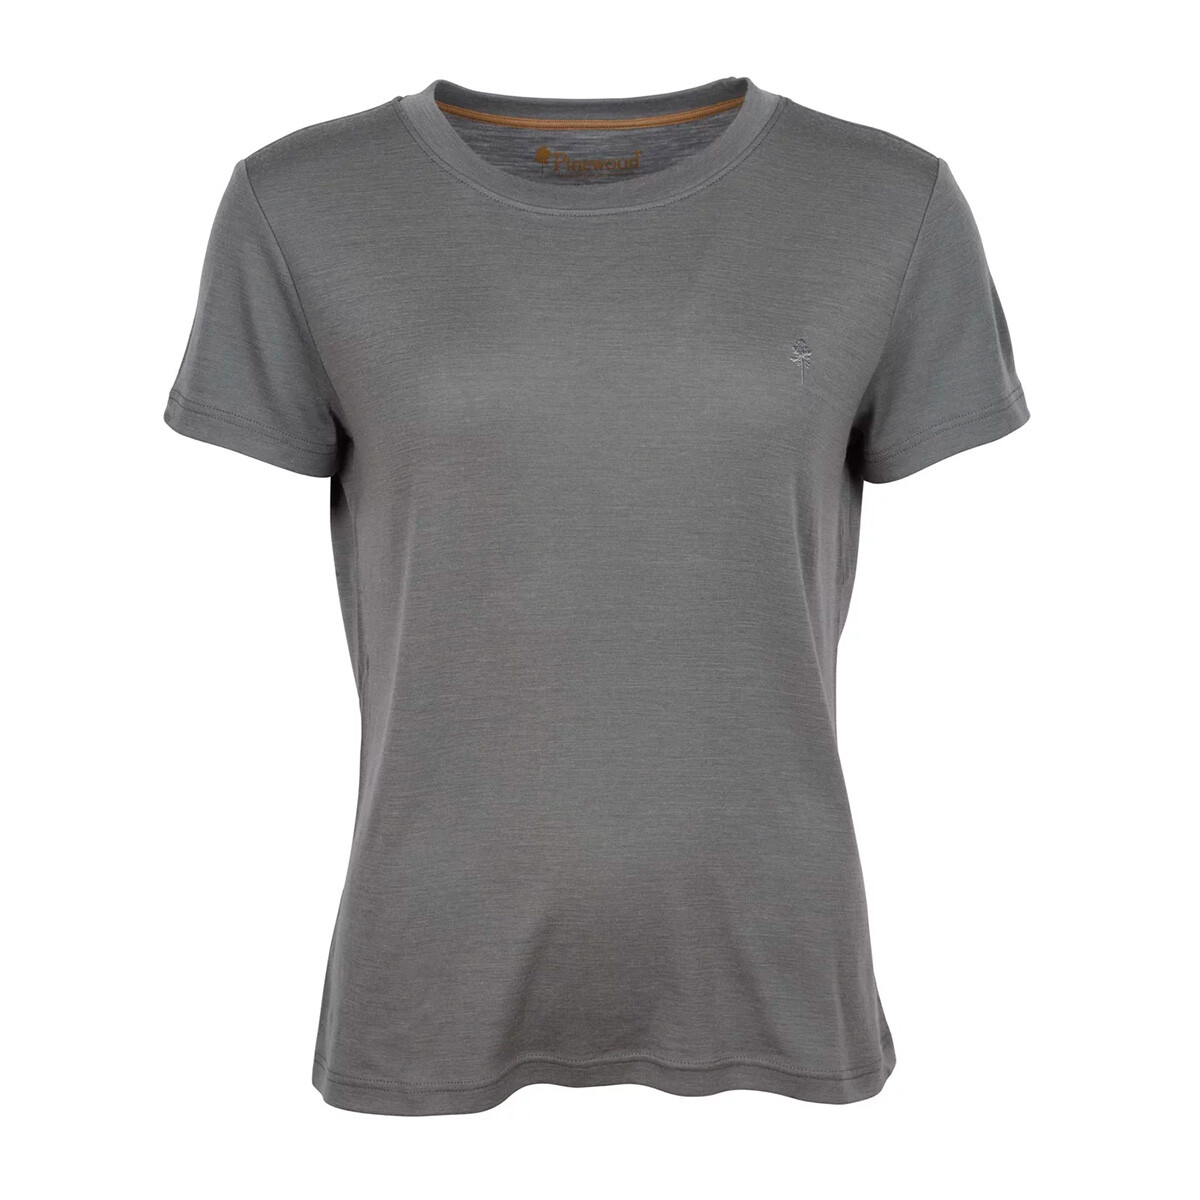 Se Pinewood Travel Merino T-shirt dame (Grey, L) hos Specialbutikken